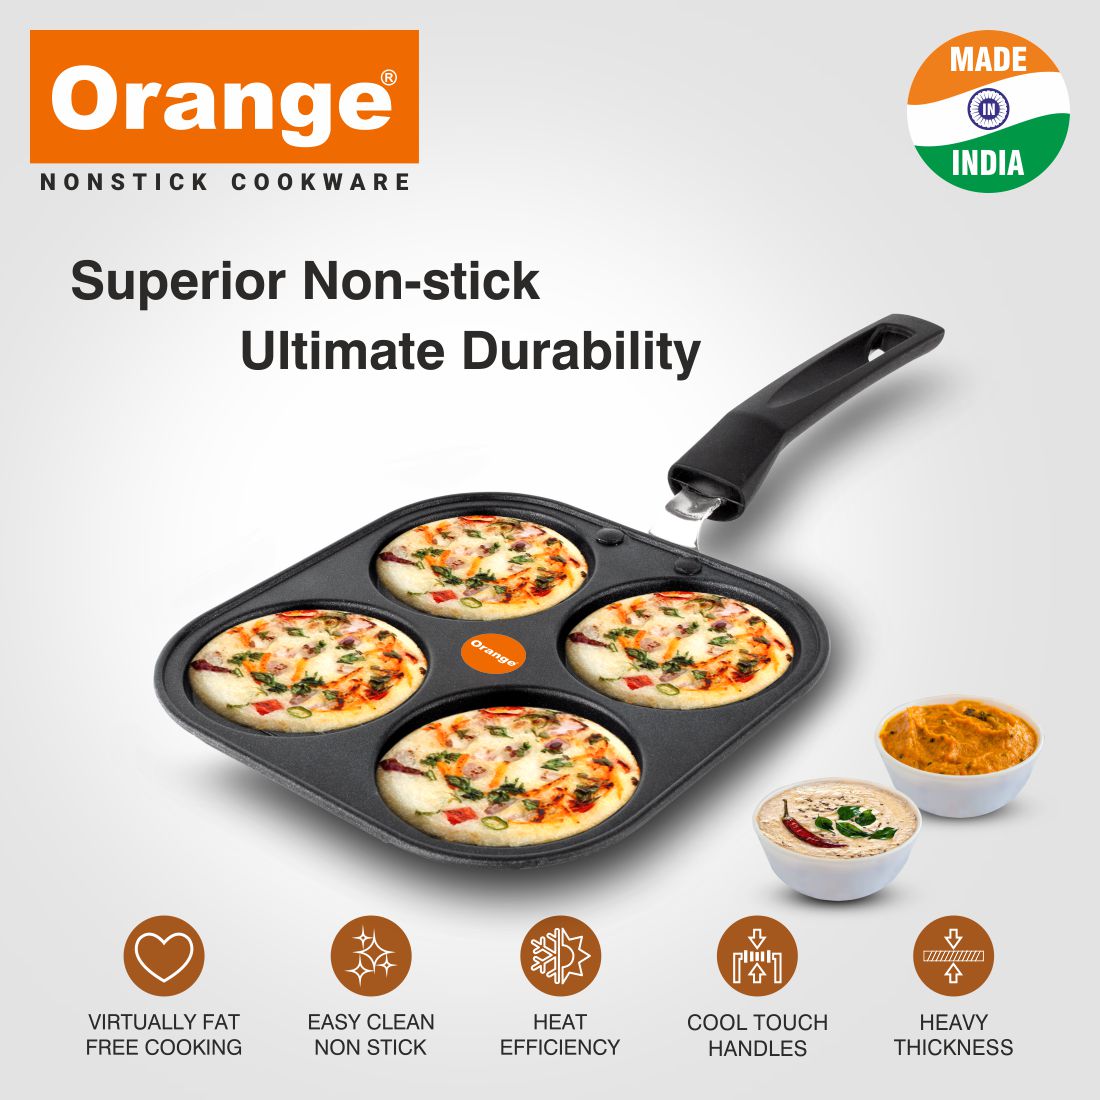 Orange Aluminium Die-Cast Non-Stick Mini Uttappa/Pan Cake/Mini Pizza/Mini Chillas Tawa | 4Bowl